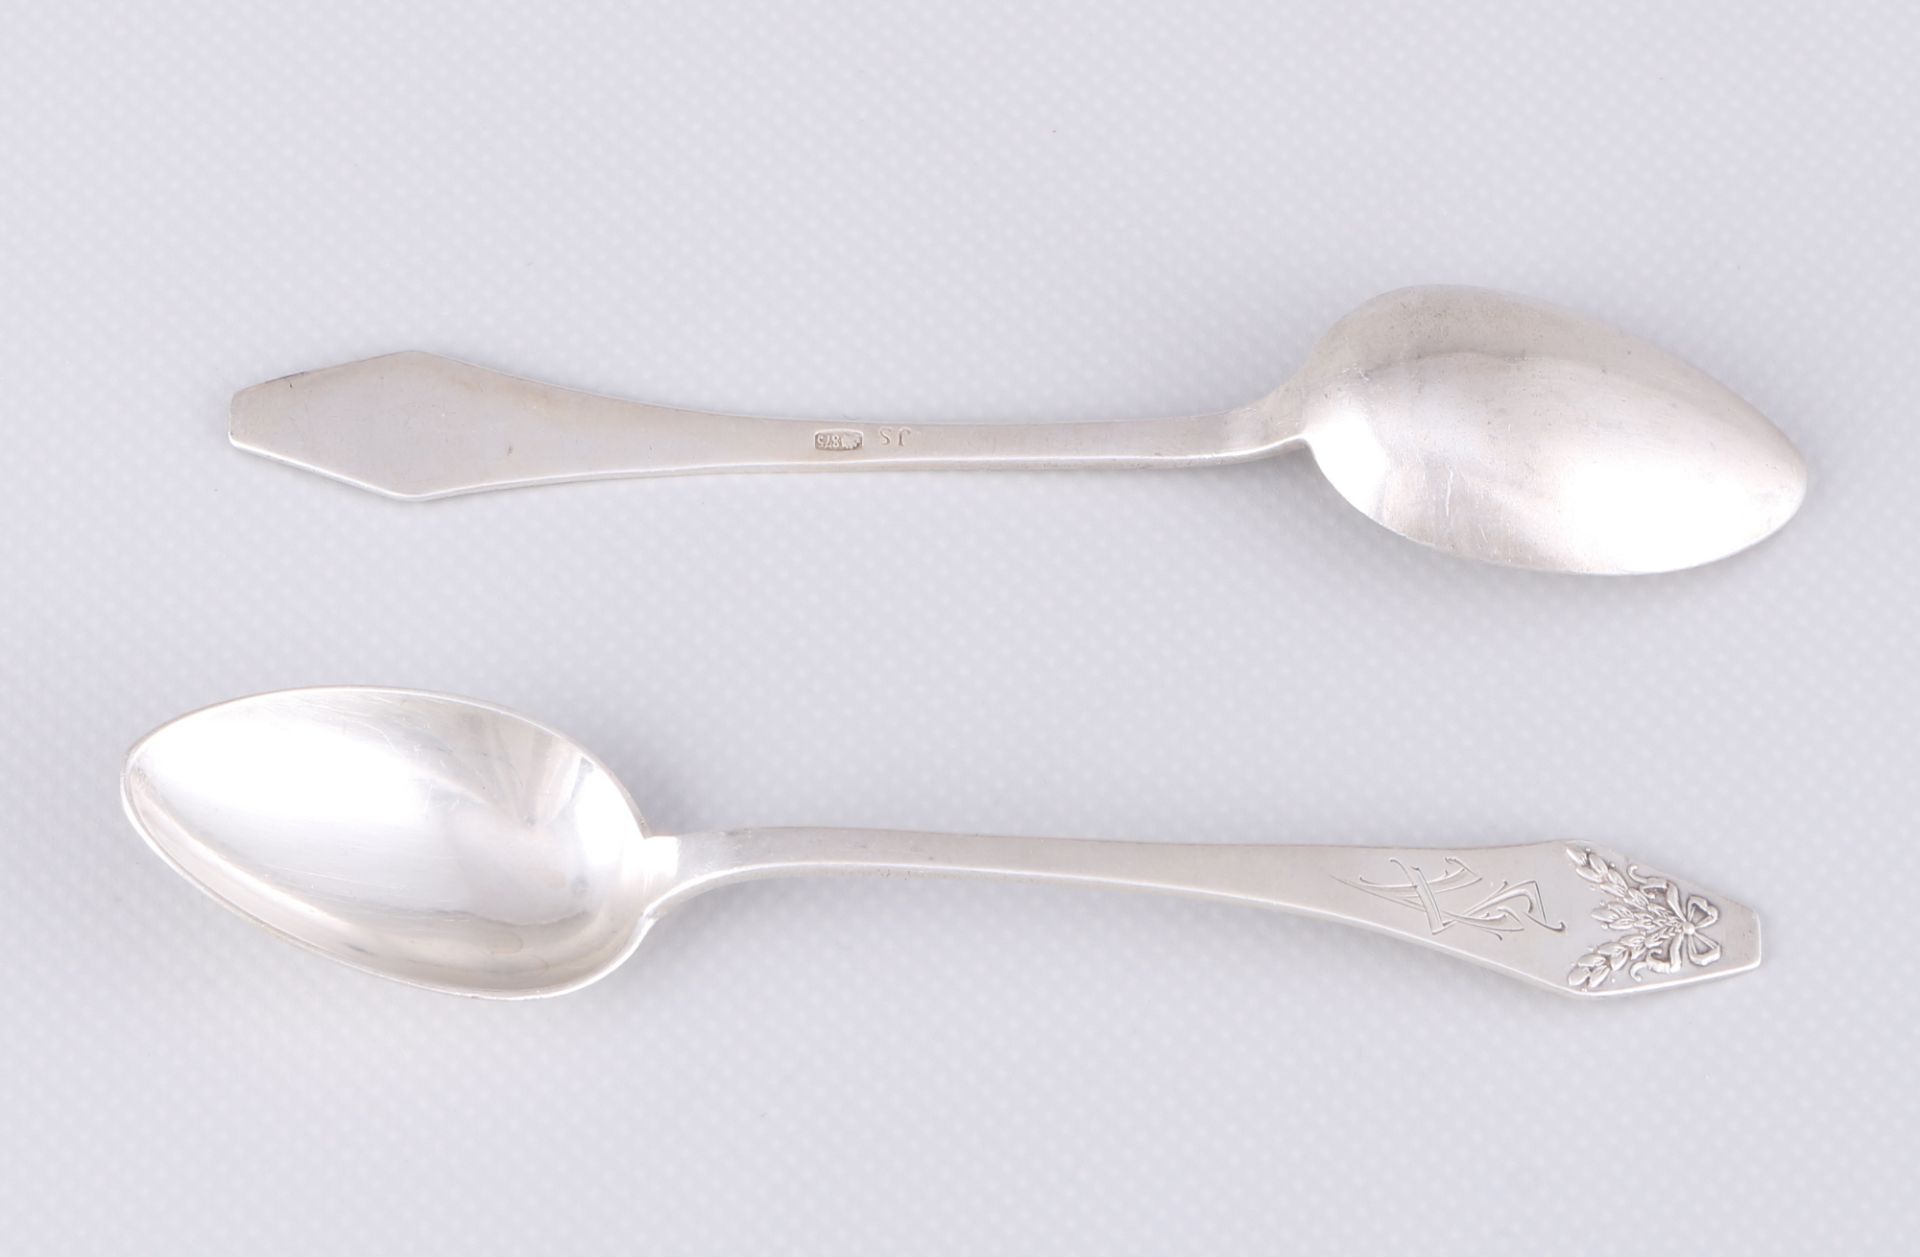 Lettland/Russland 875 Silber 12 Kaffeelöffel, latvian/russian silver coffee spoons, - Image 2 of 3